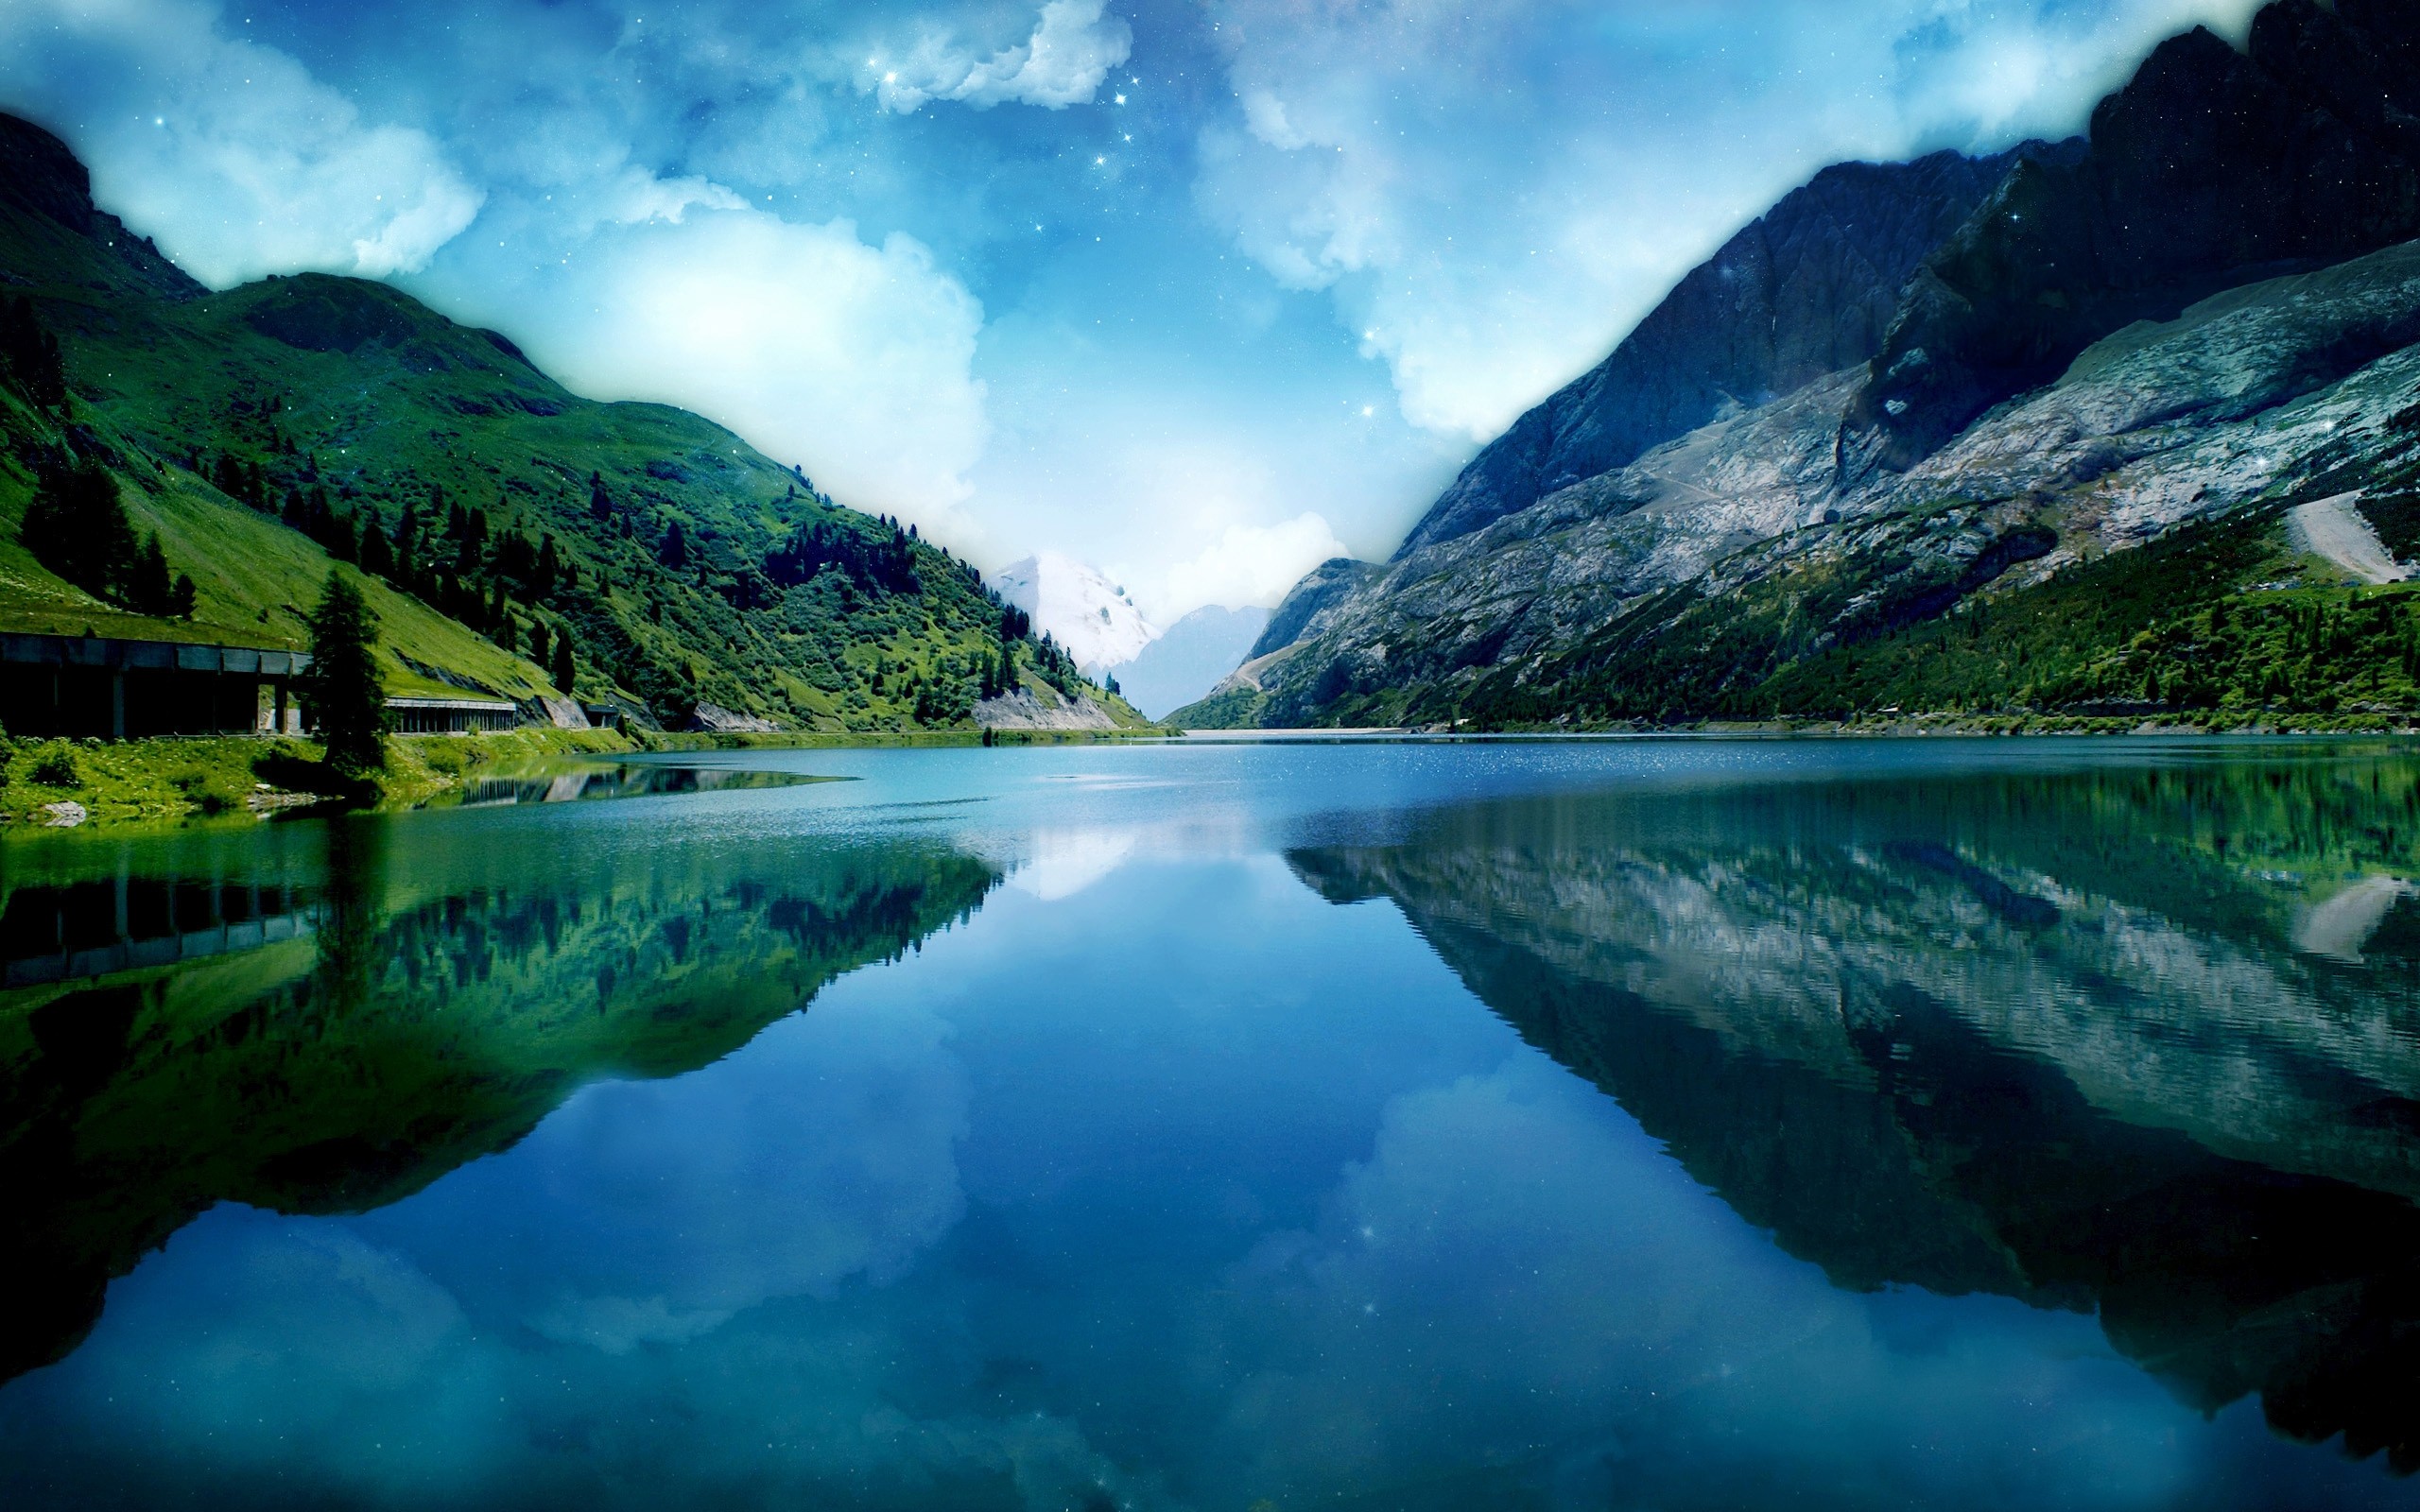 General 2560x1600 mountains lake Italy reflection digital art nature